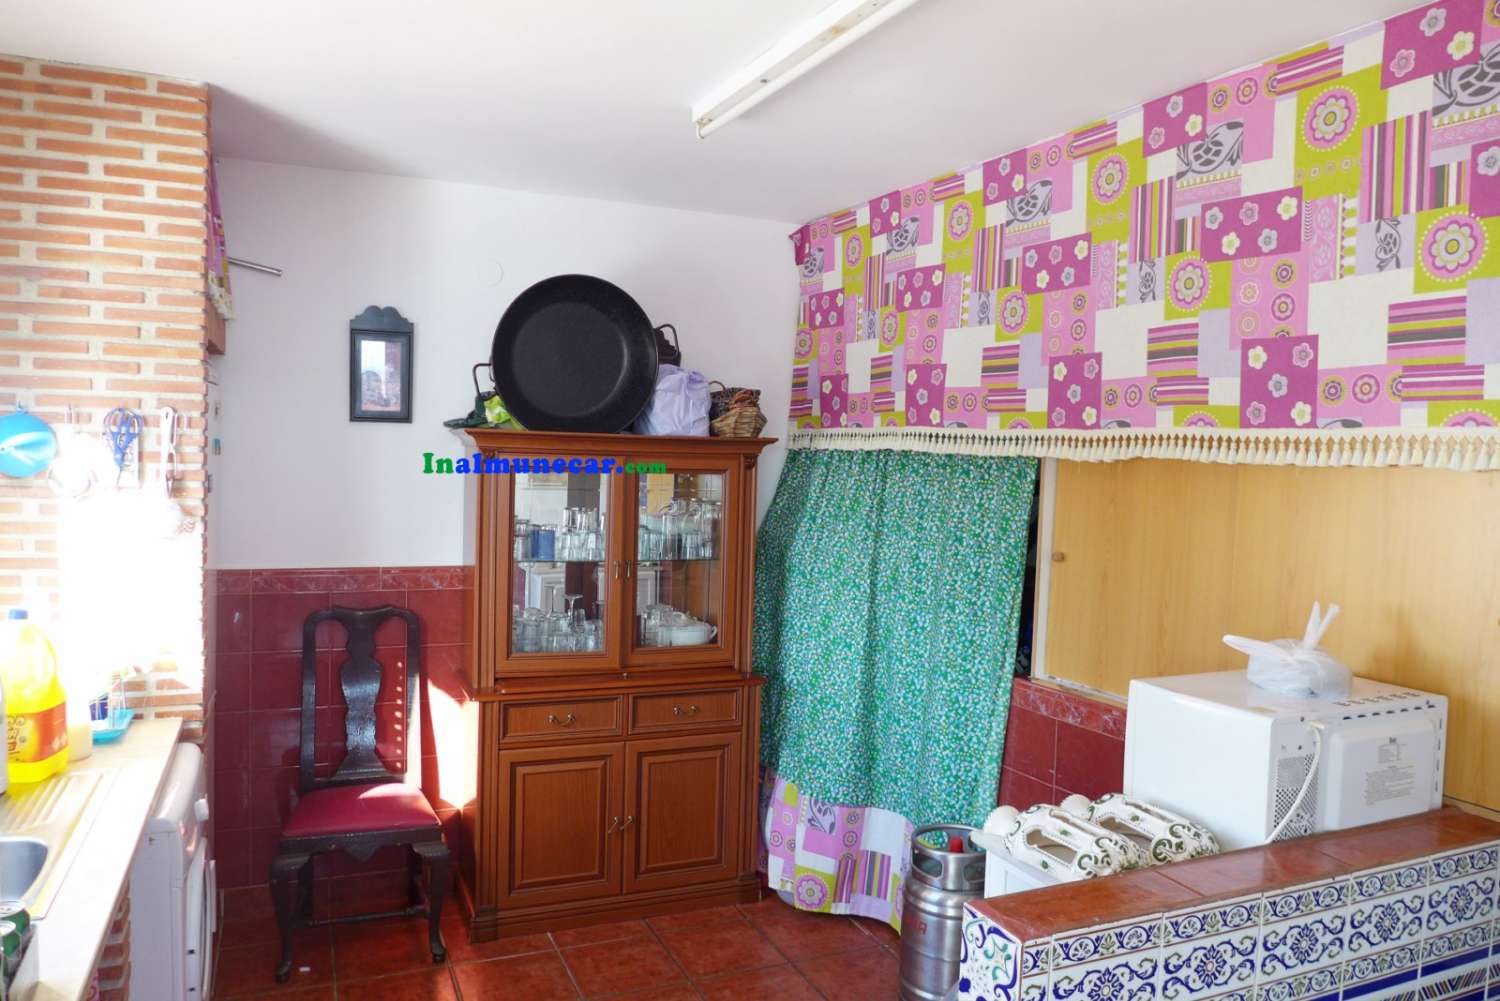 Hus till salu i Almuñécar, i Gamla stan i stadsdelen San Miguel